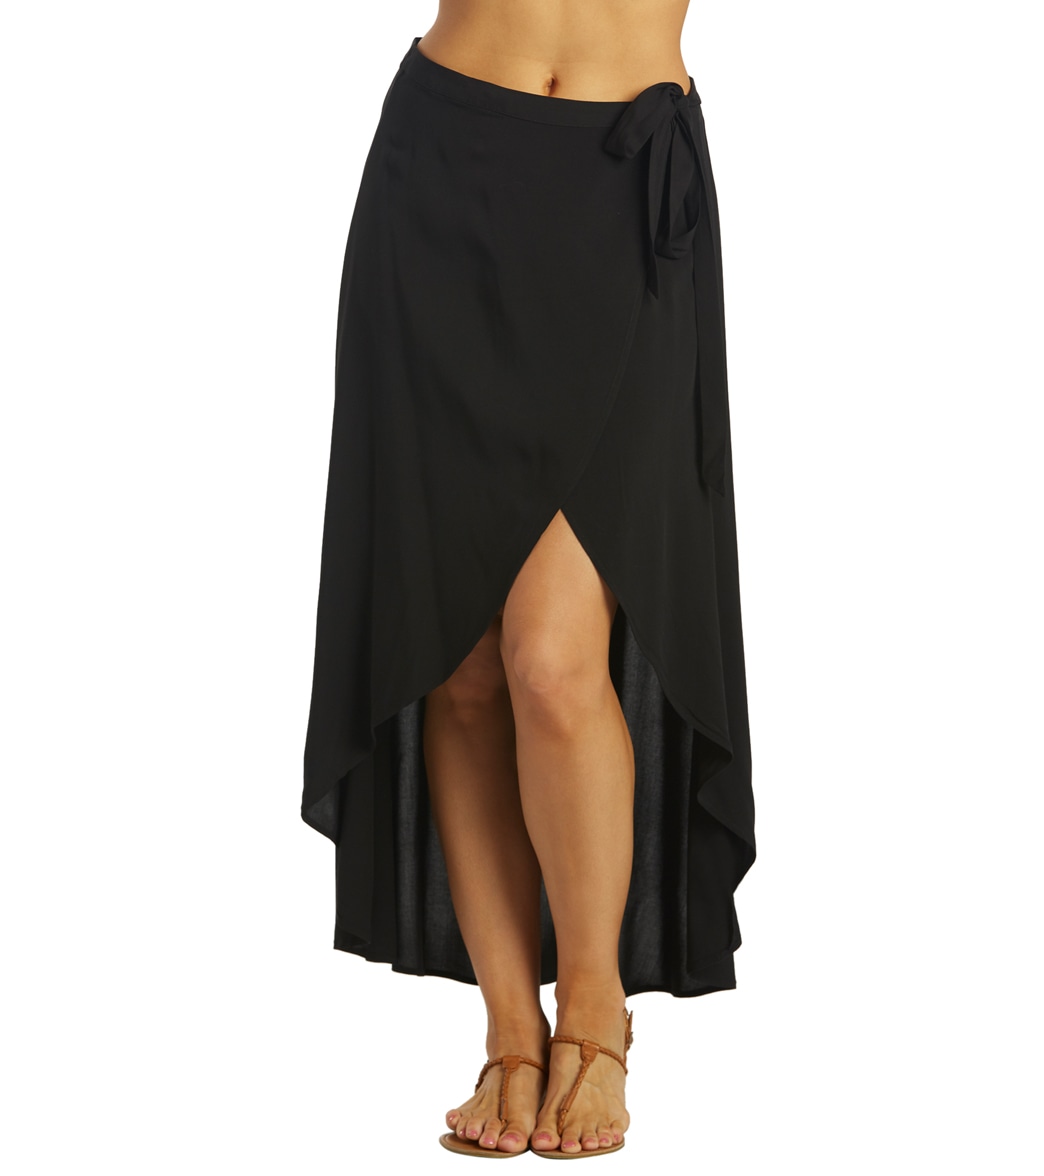 Body Glove Women's Lena Wrap Skirt - Black Large - Swimoutlet.com